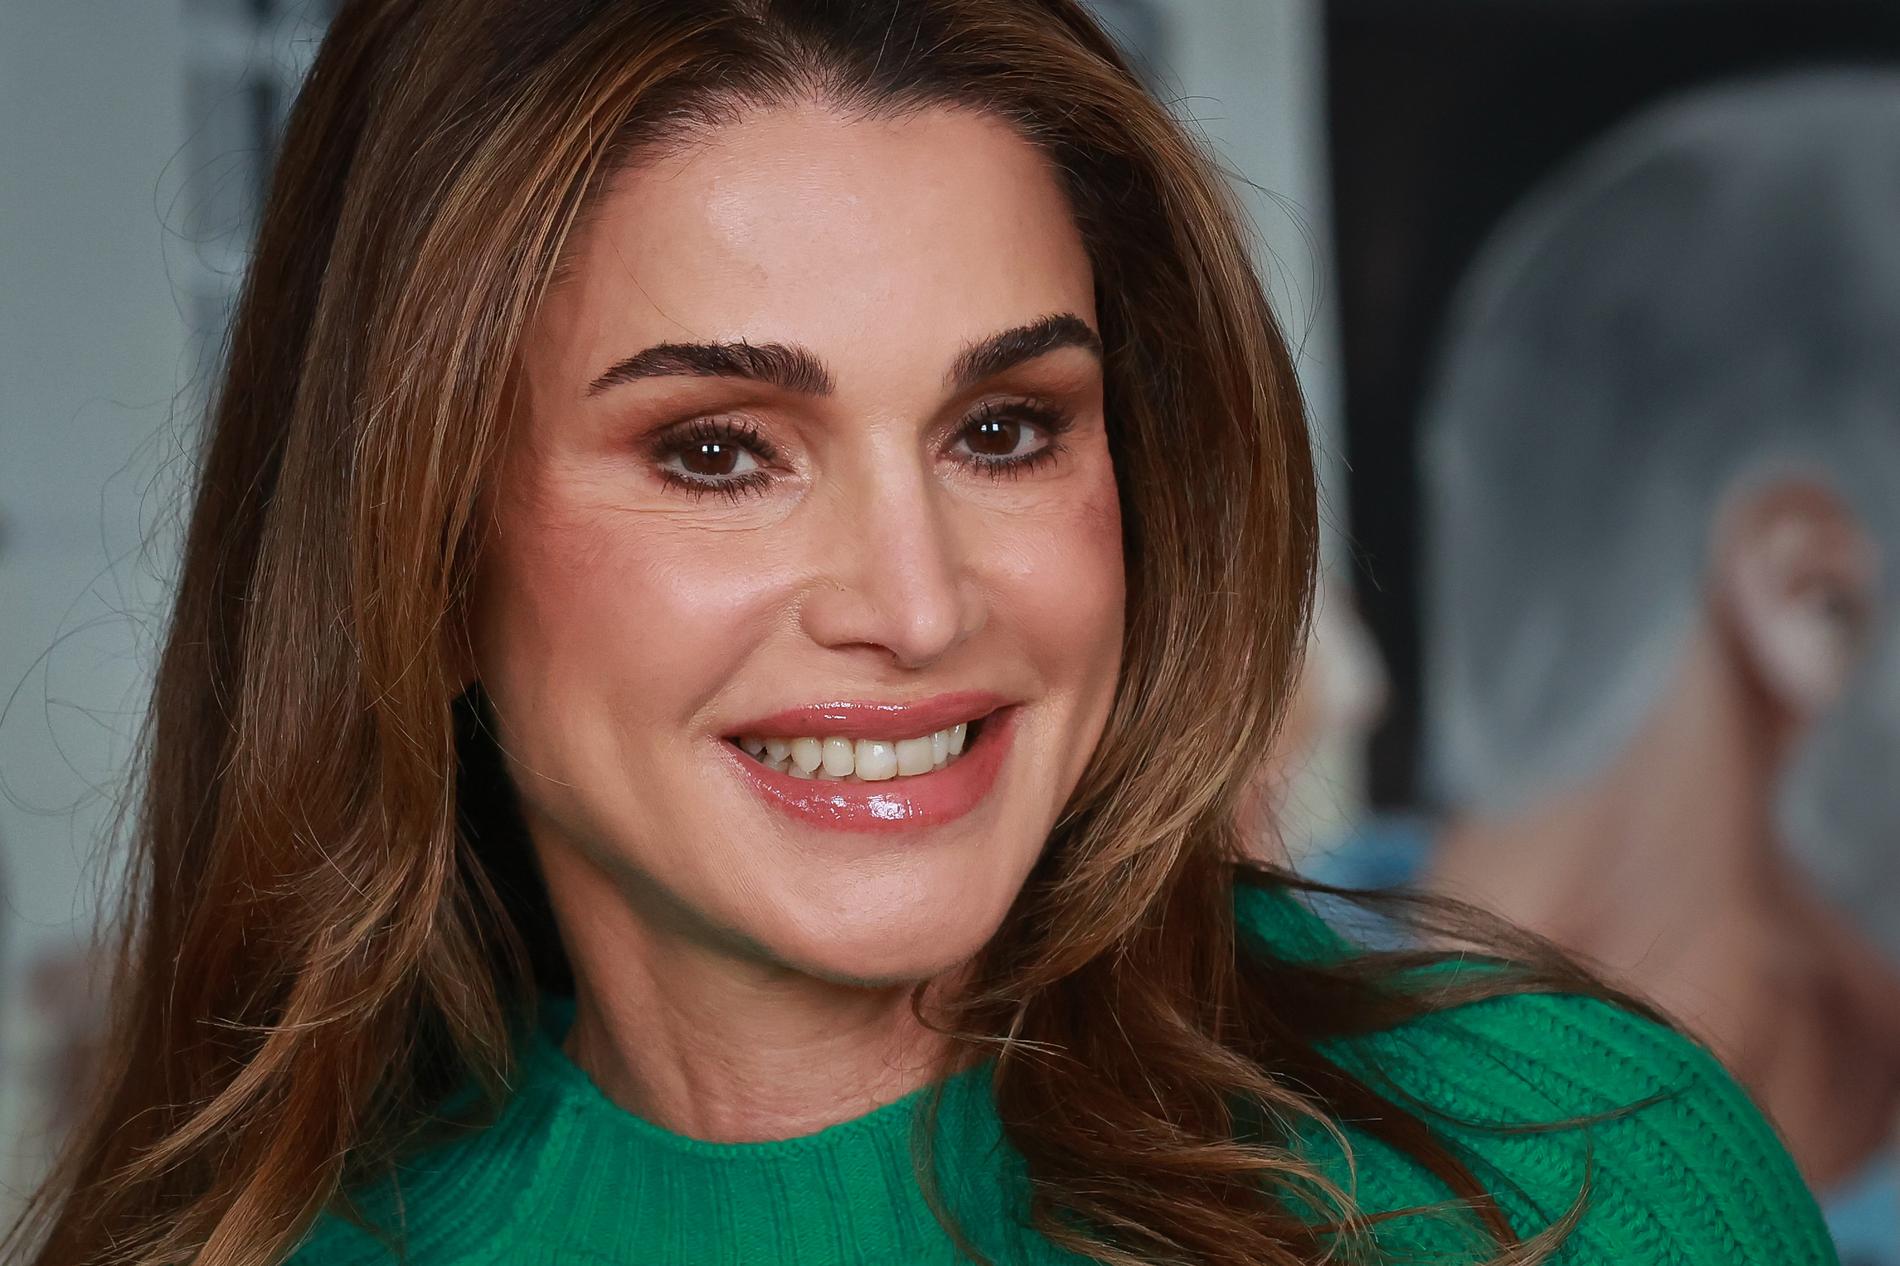 Mother of four: Queen Rania herself has children Hussein, Iman, Salma and Hashem from her husband, King Abdullah II (61), King of Jordan.